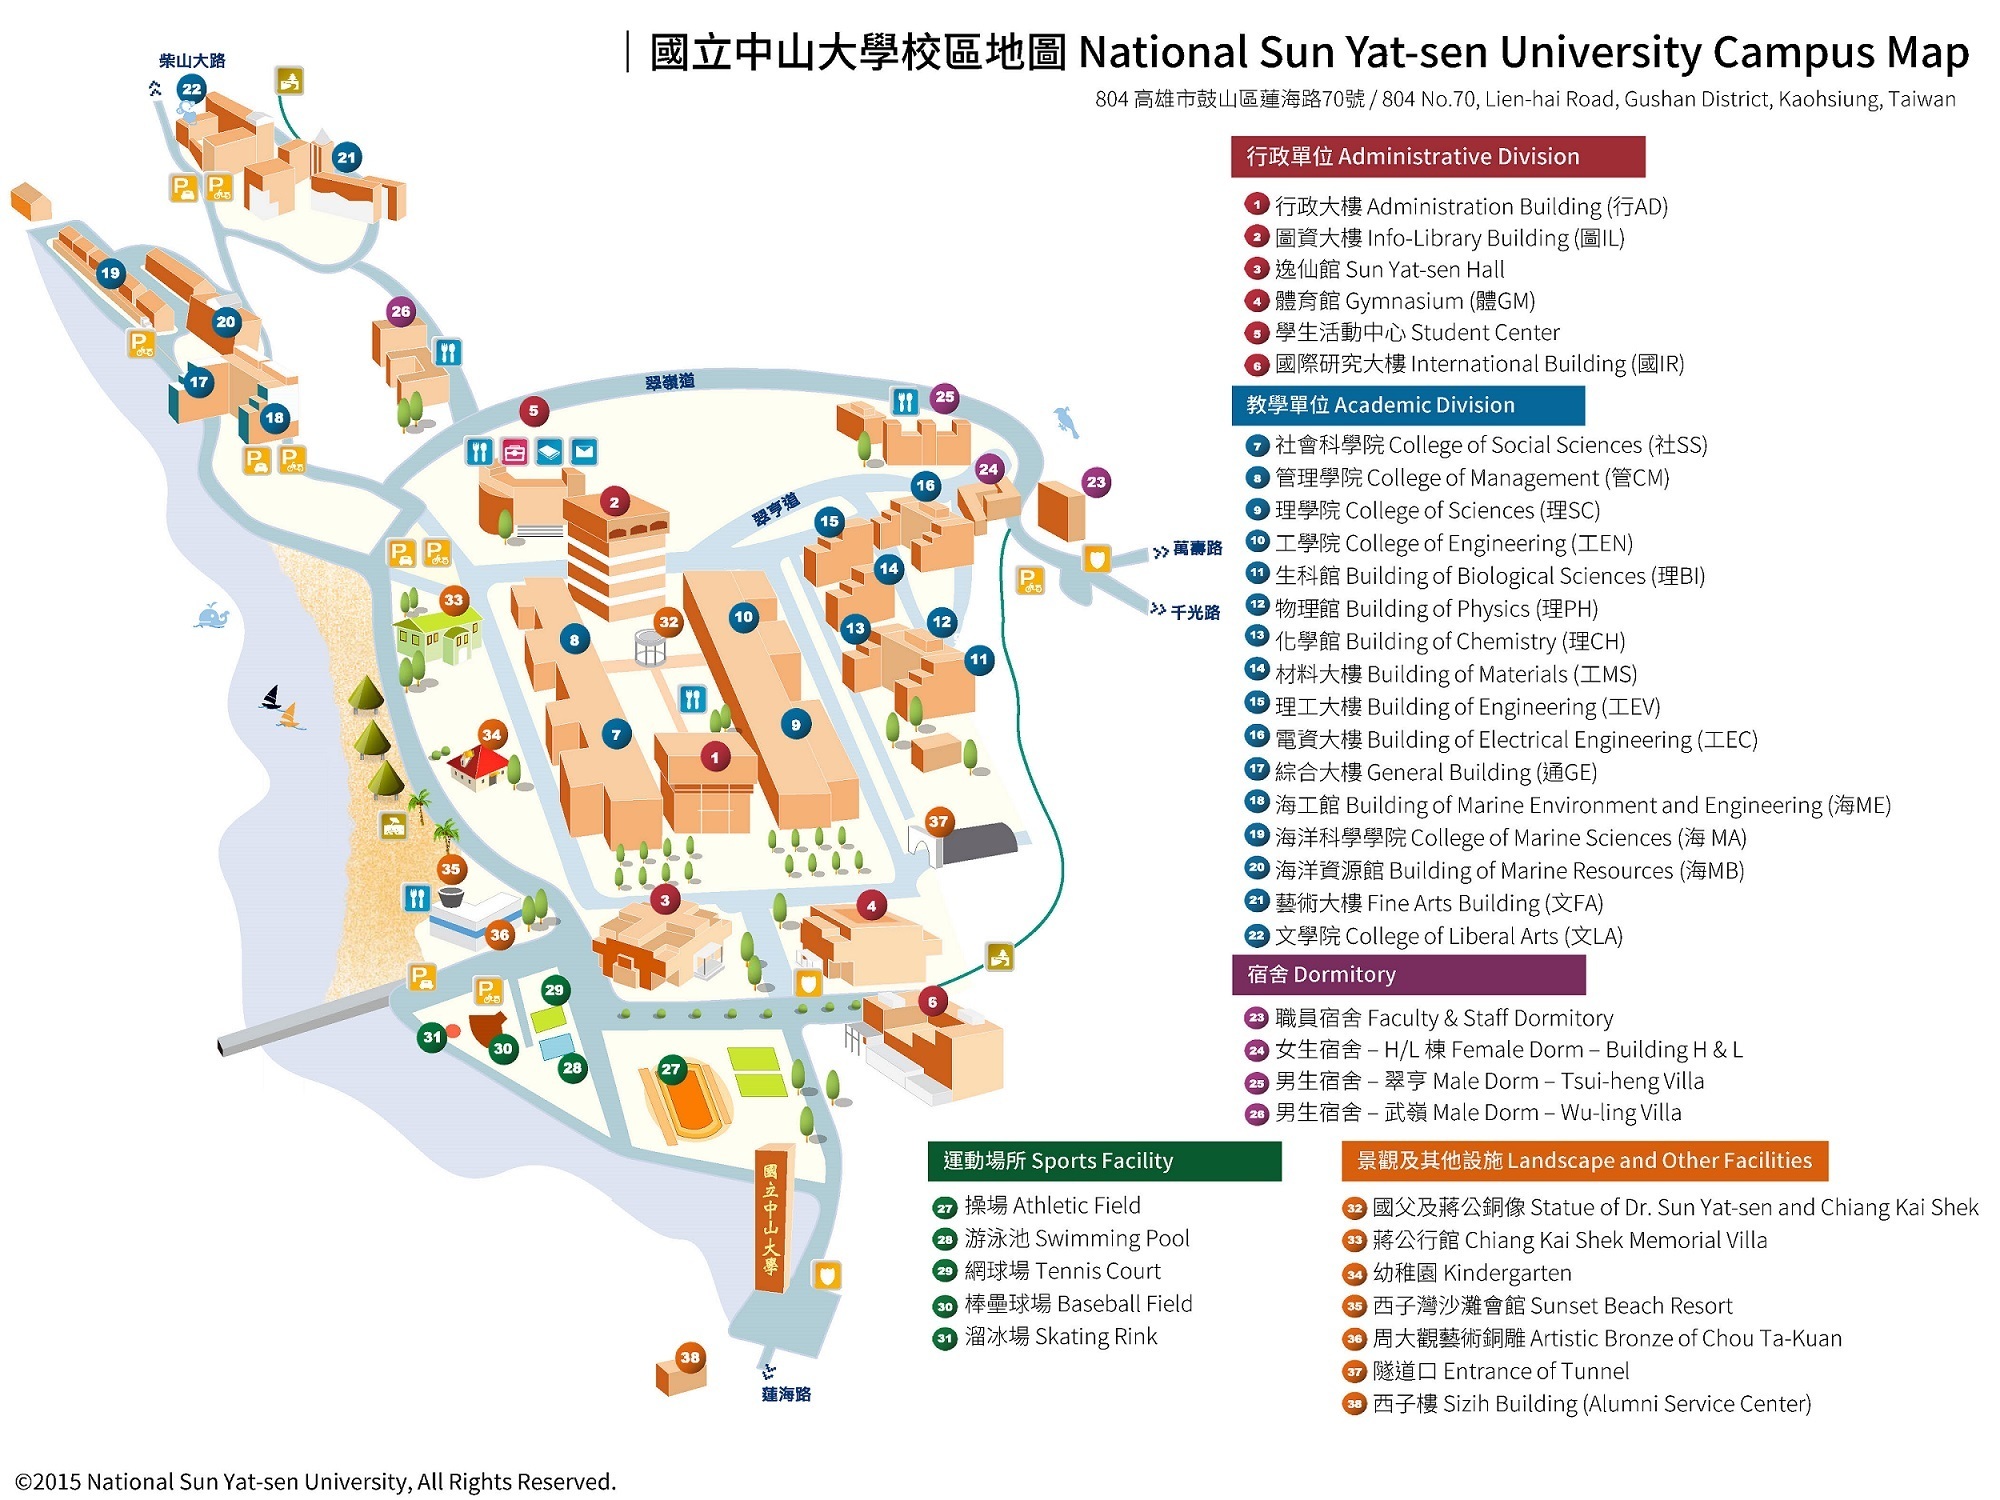 Campus map download